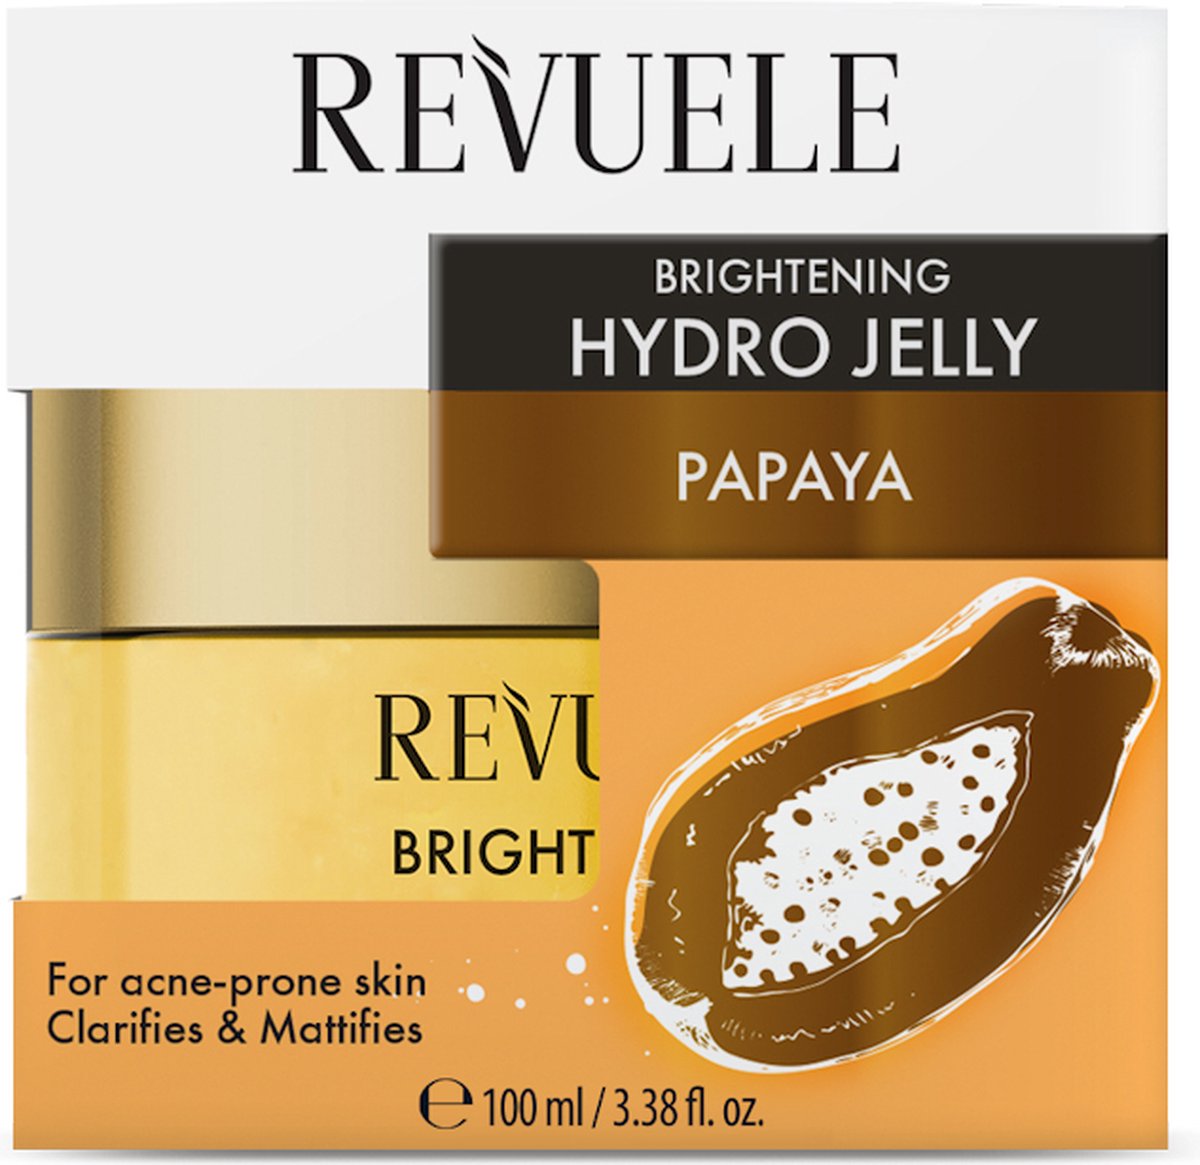 Revuele Brightening Hydro Jelly Papaya 100ml.